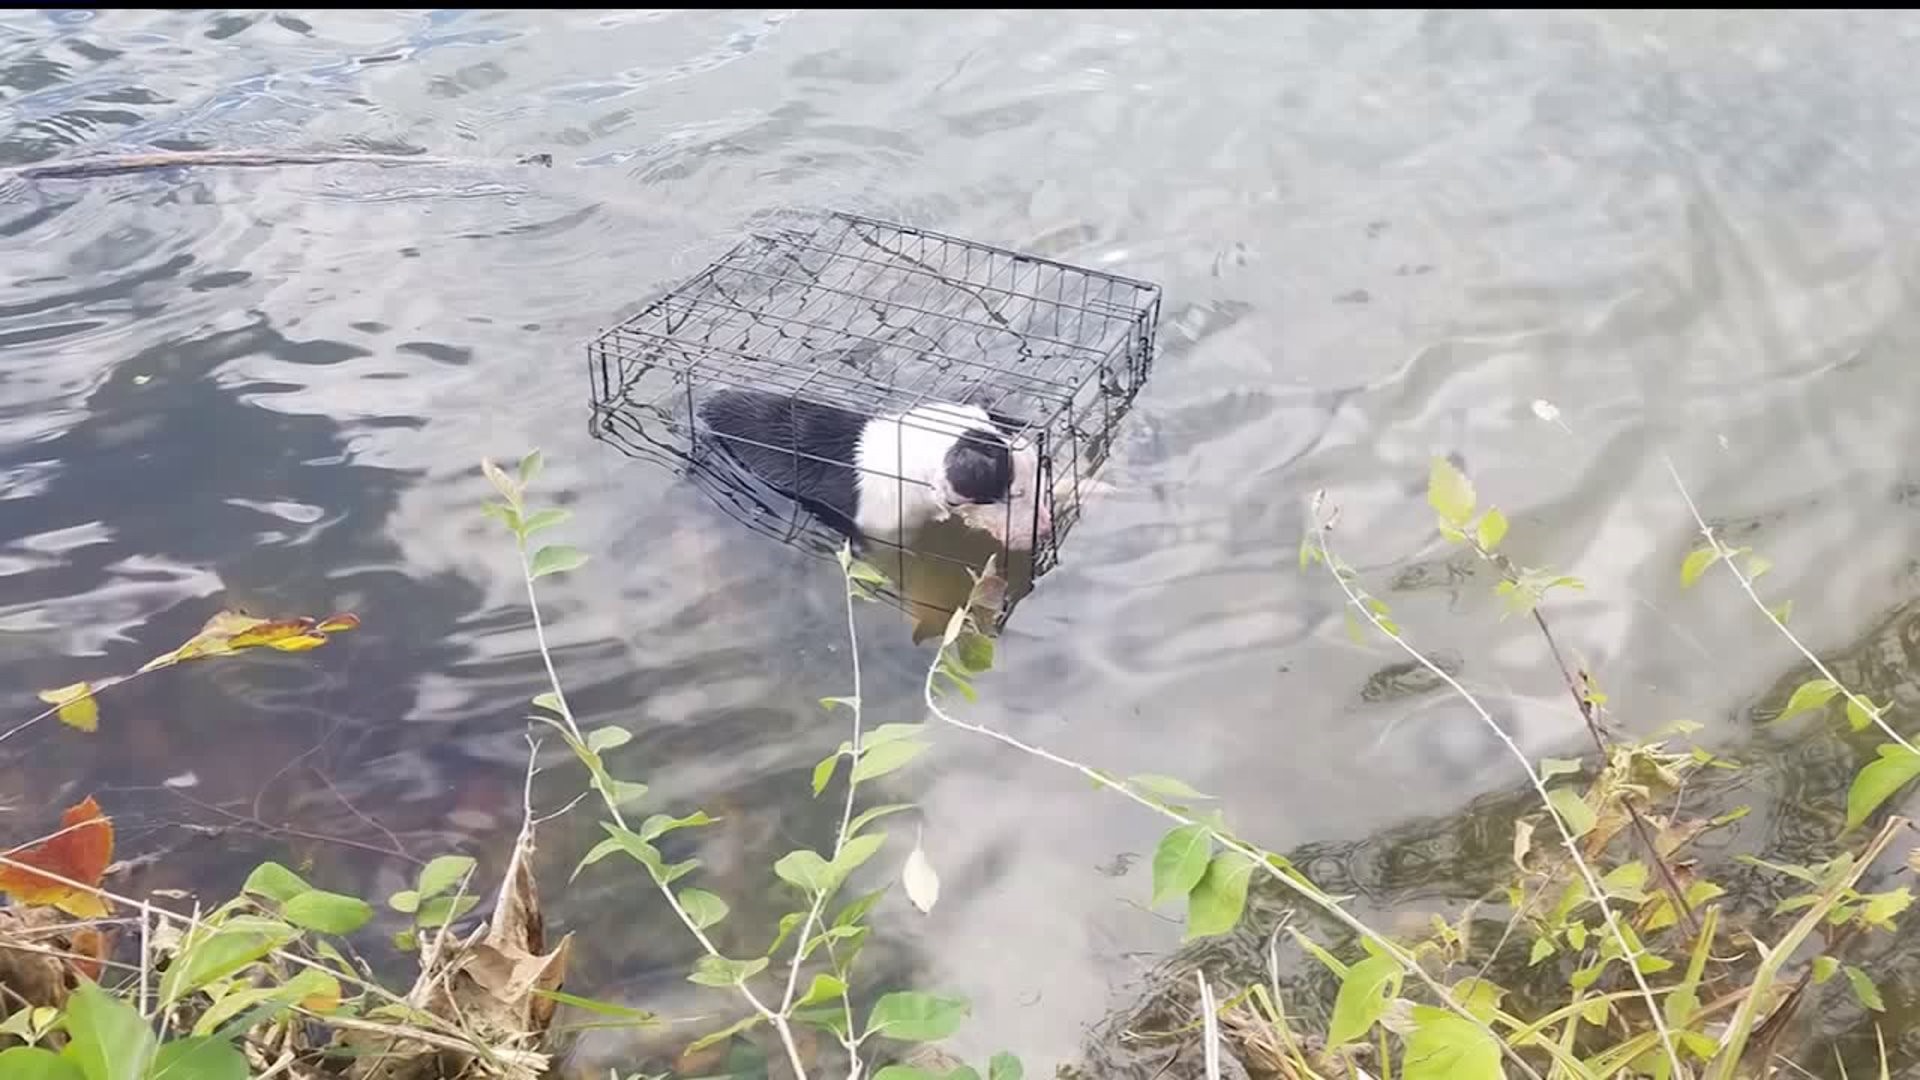 Man rescues caged dog floating in freezing Illinois lake